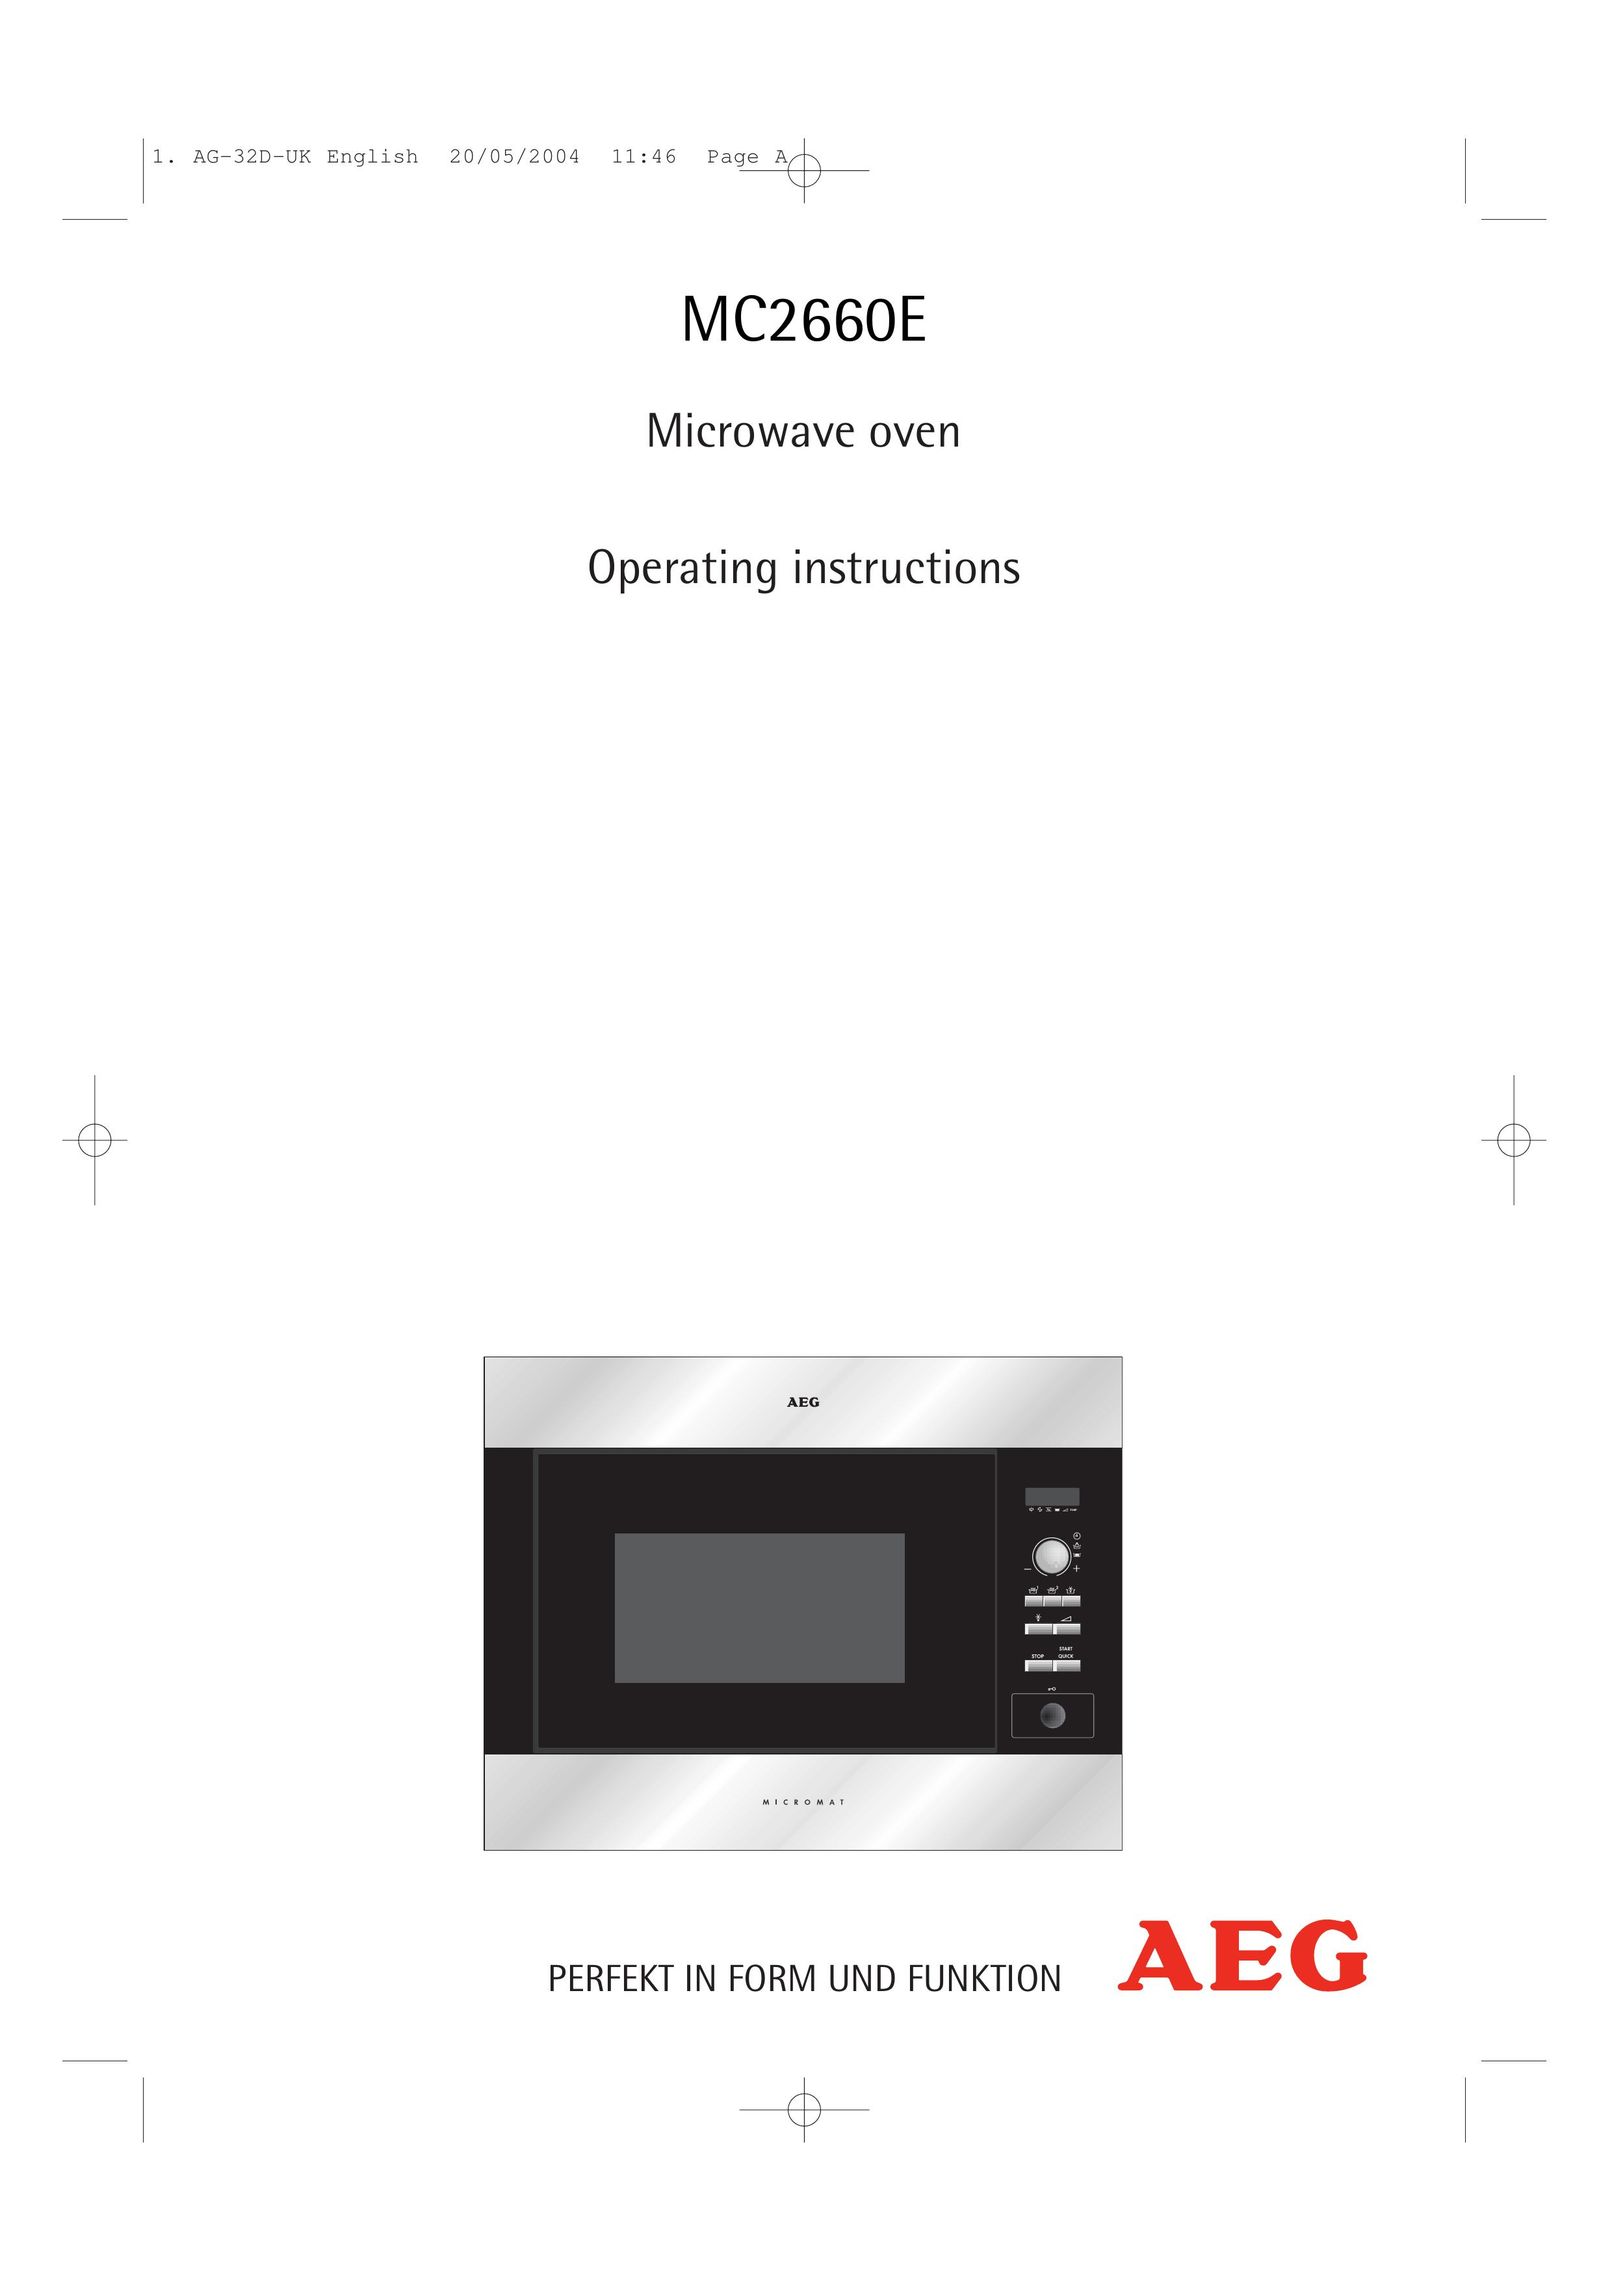 AEG MC2660E Microwave Oven User Manual (Page 1)